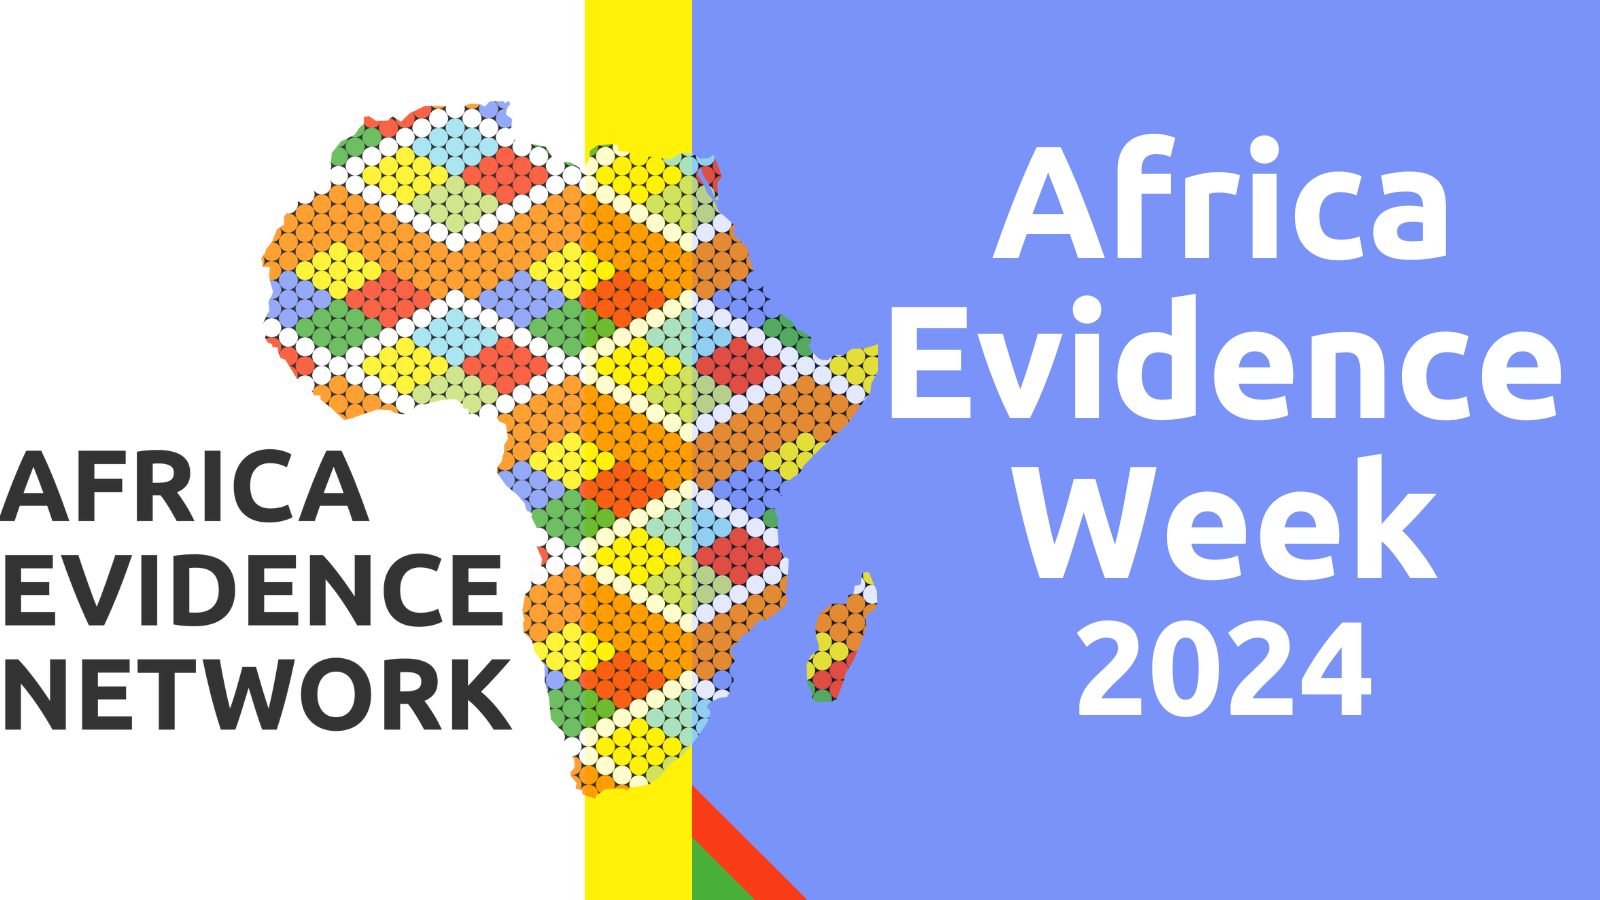 Africa Evidence Week 2024